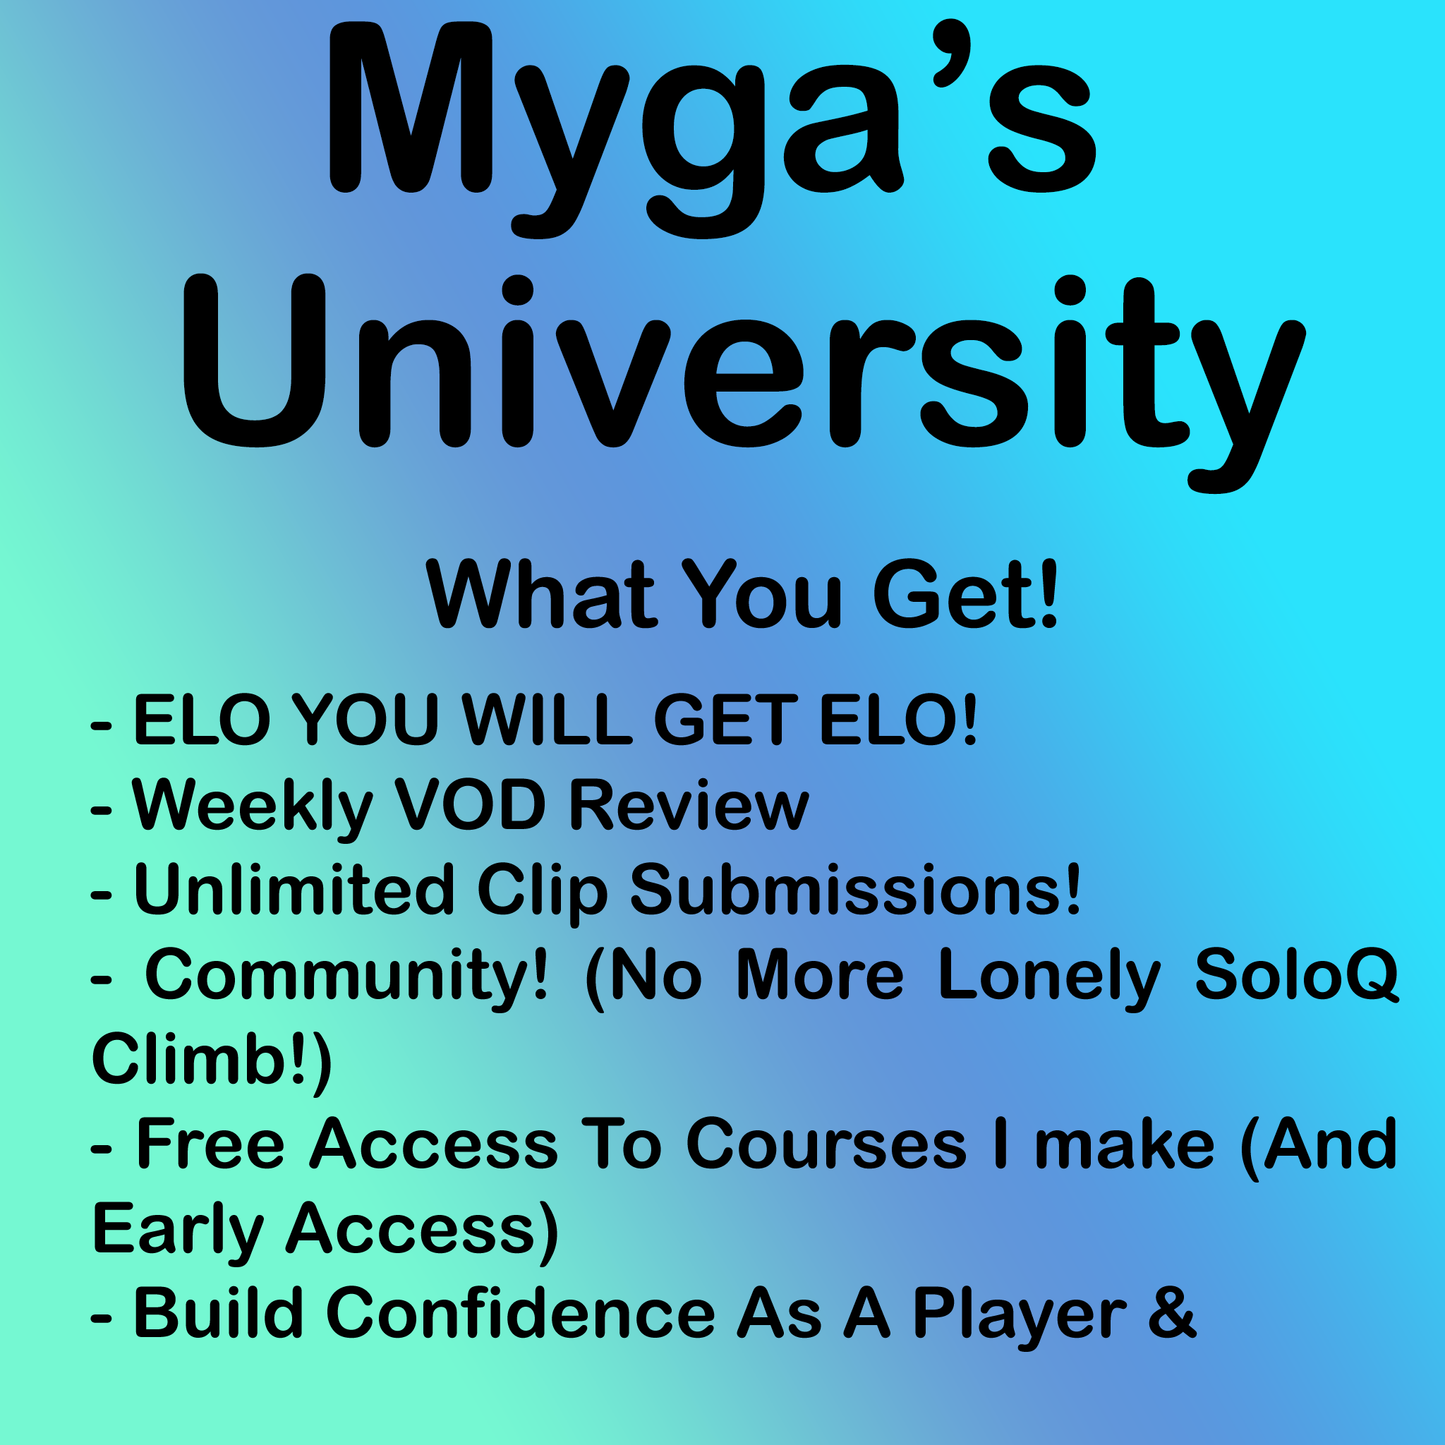 Myga's University